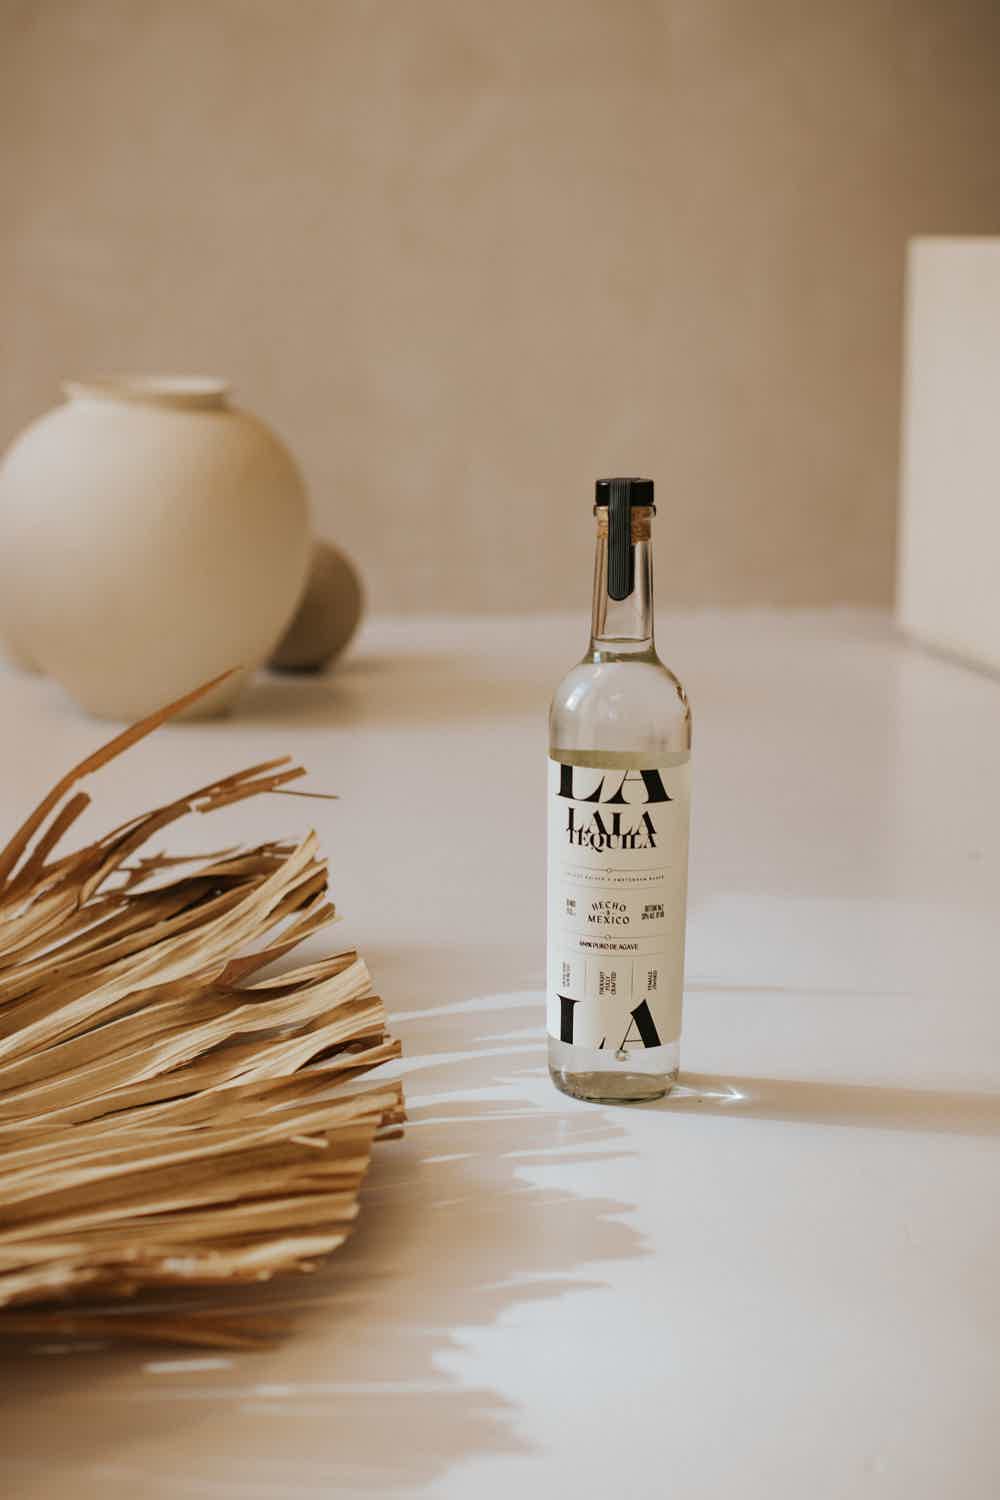 LALA Tequila Blanco 38.0% 0.7L, Spirits